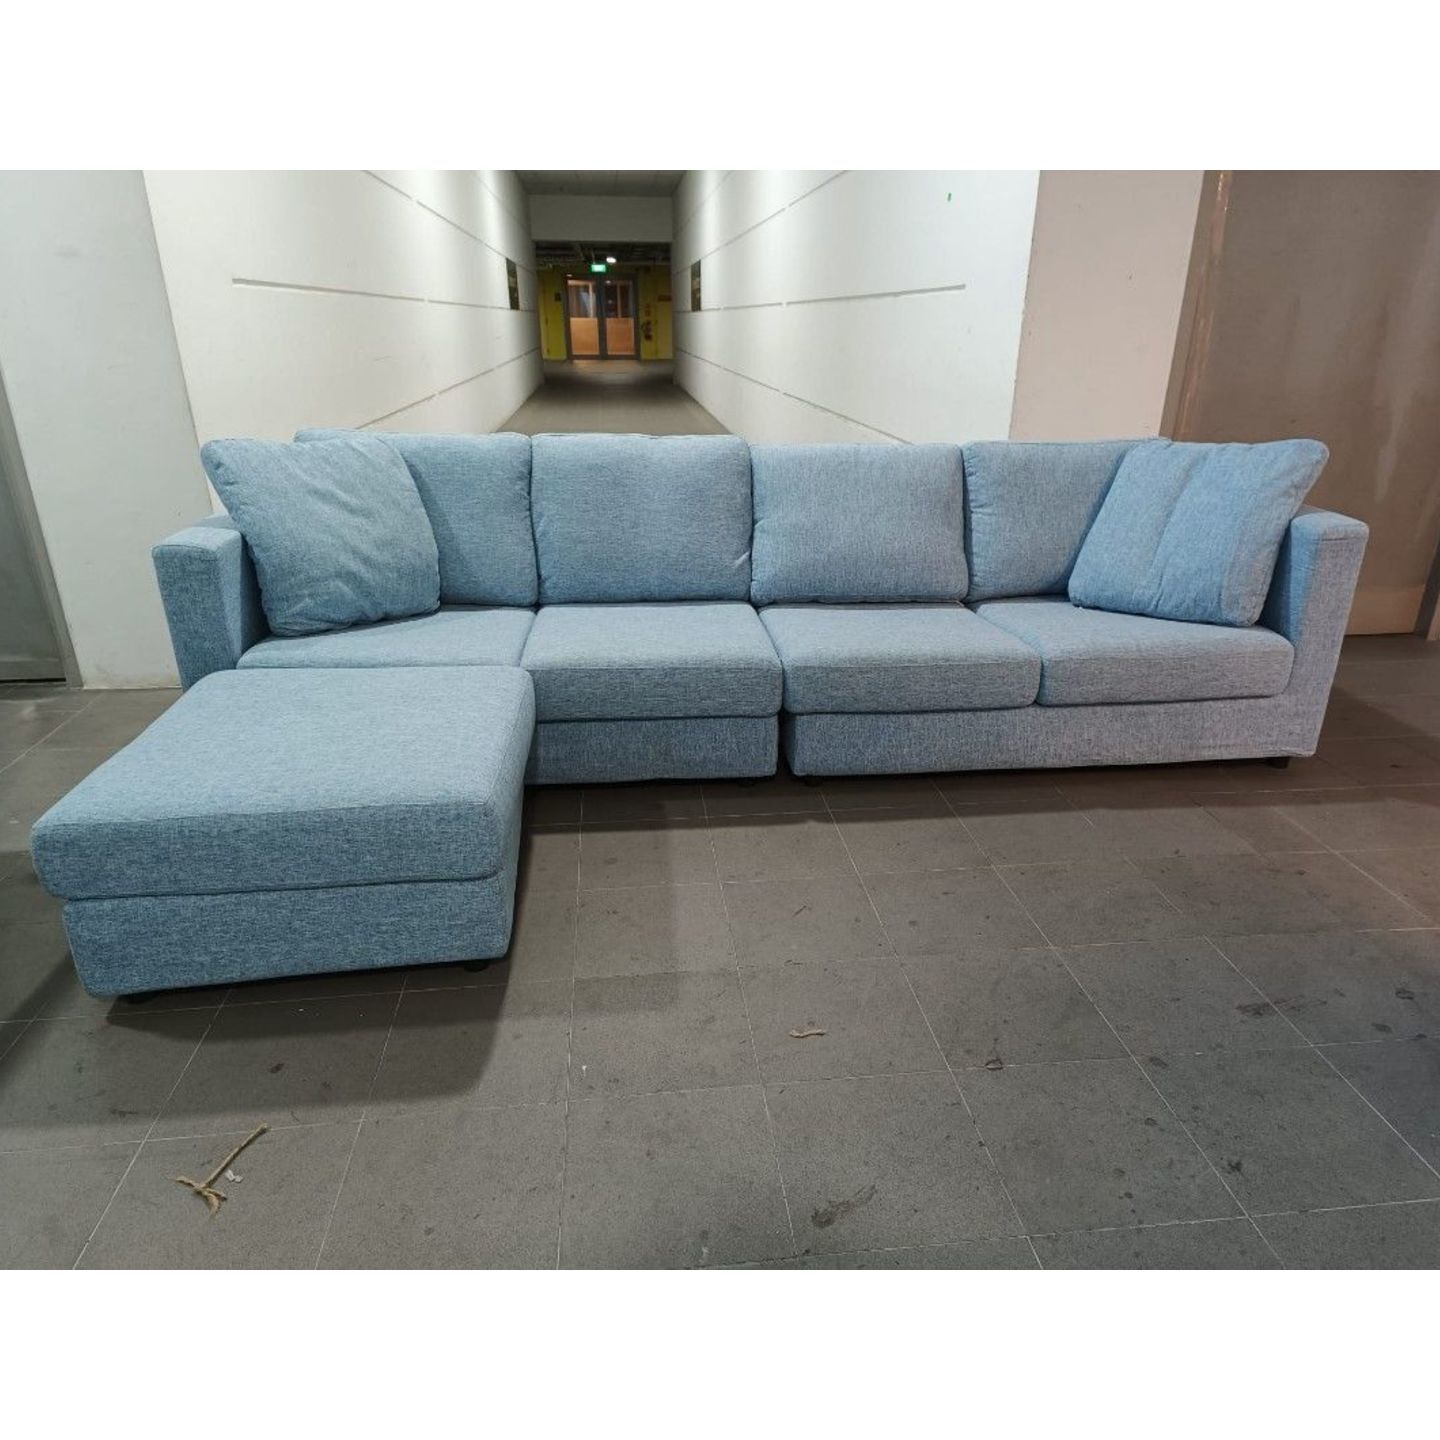 CLARISSA 4 Seater Modular Extended L Shaped Sofa in DENIM BLUE FABRIC